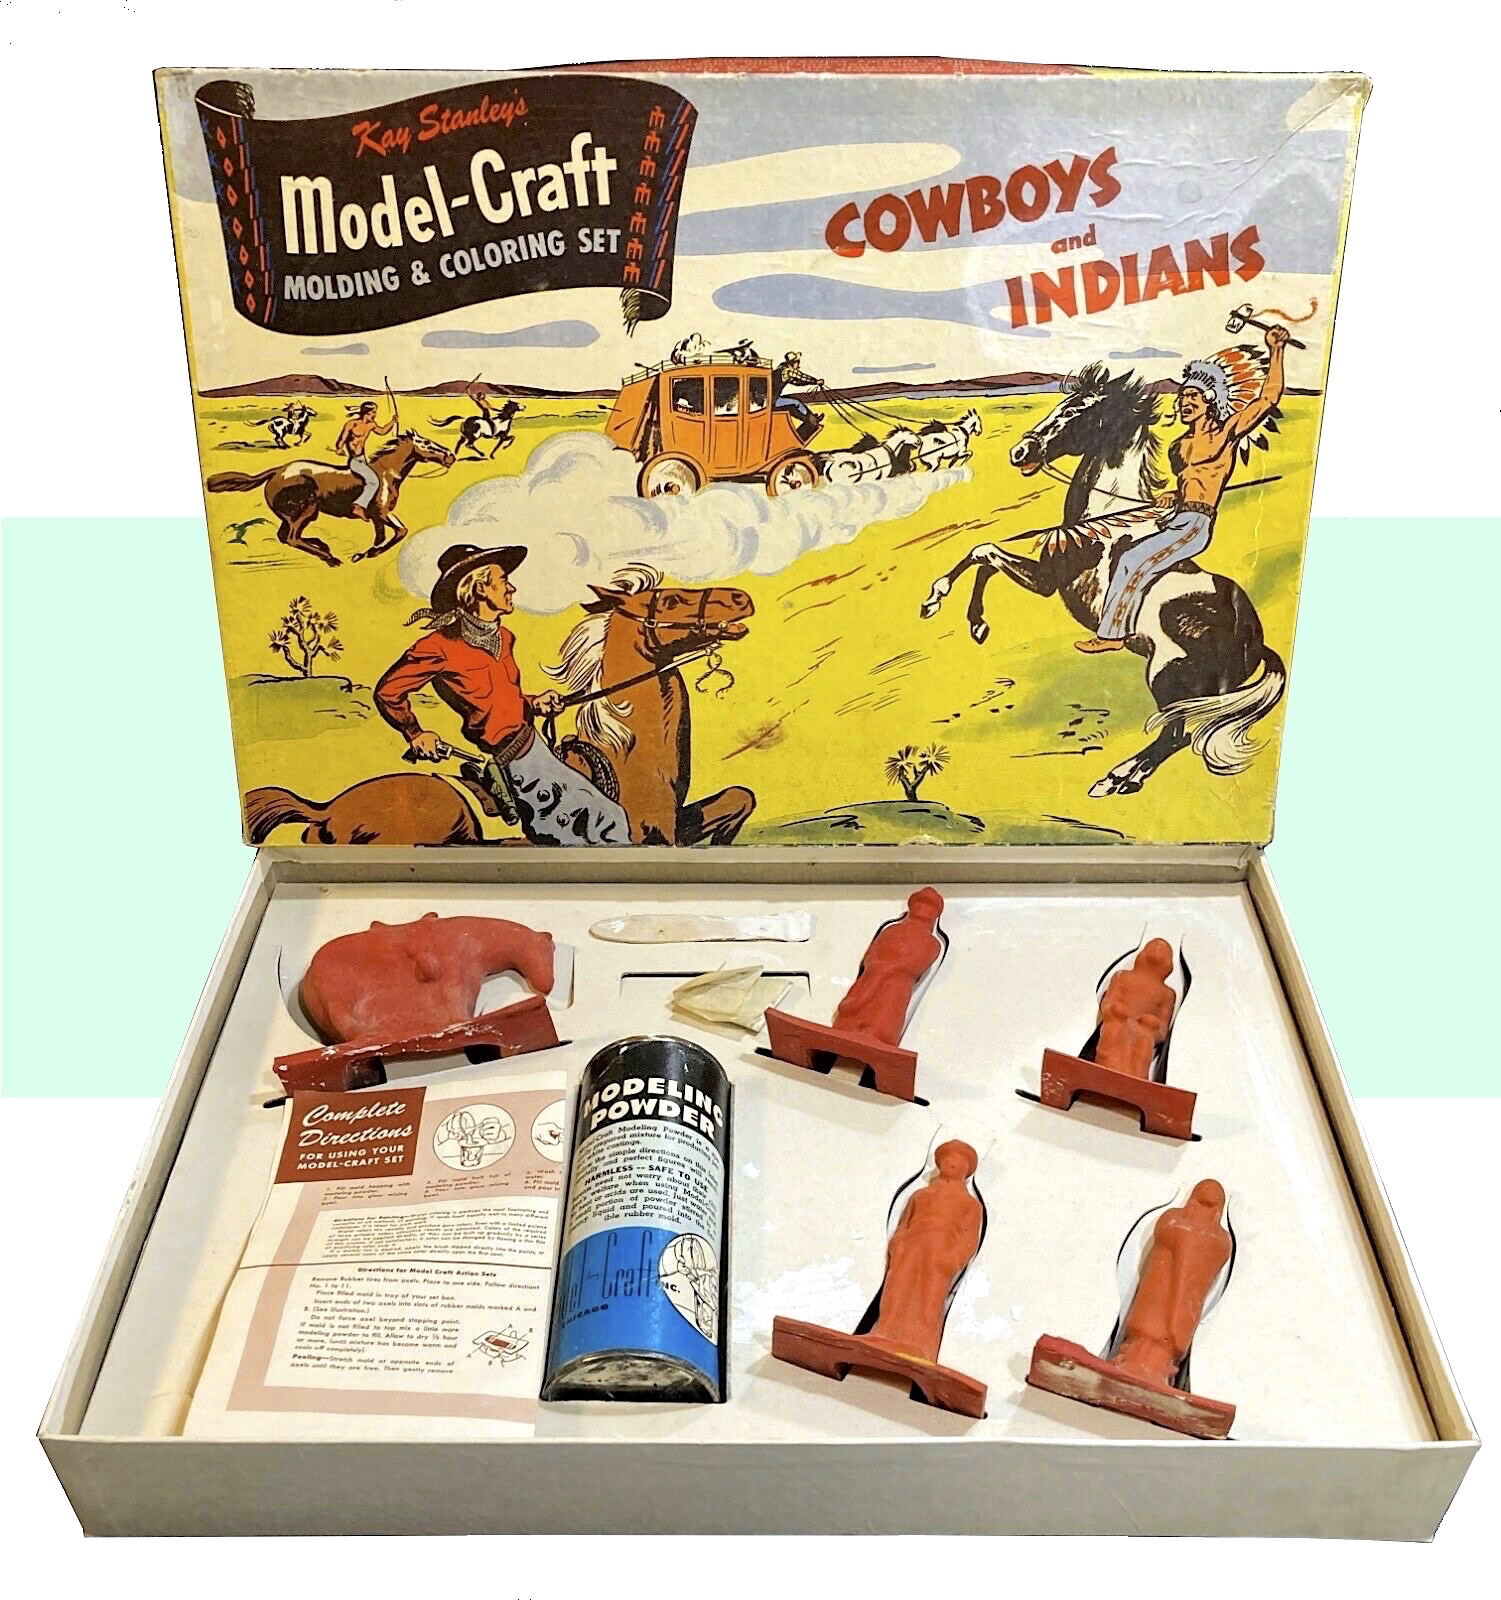 Model-Craft, Inc., est. 1941